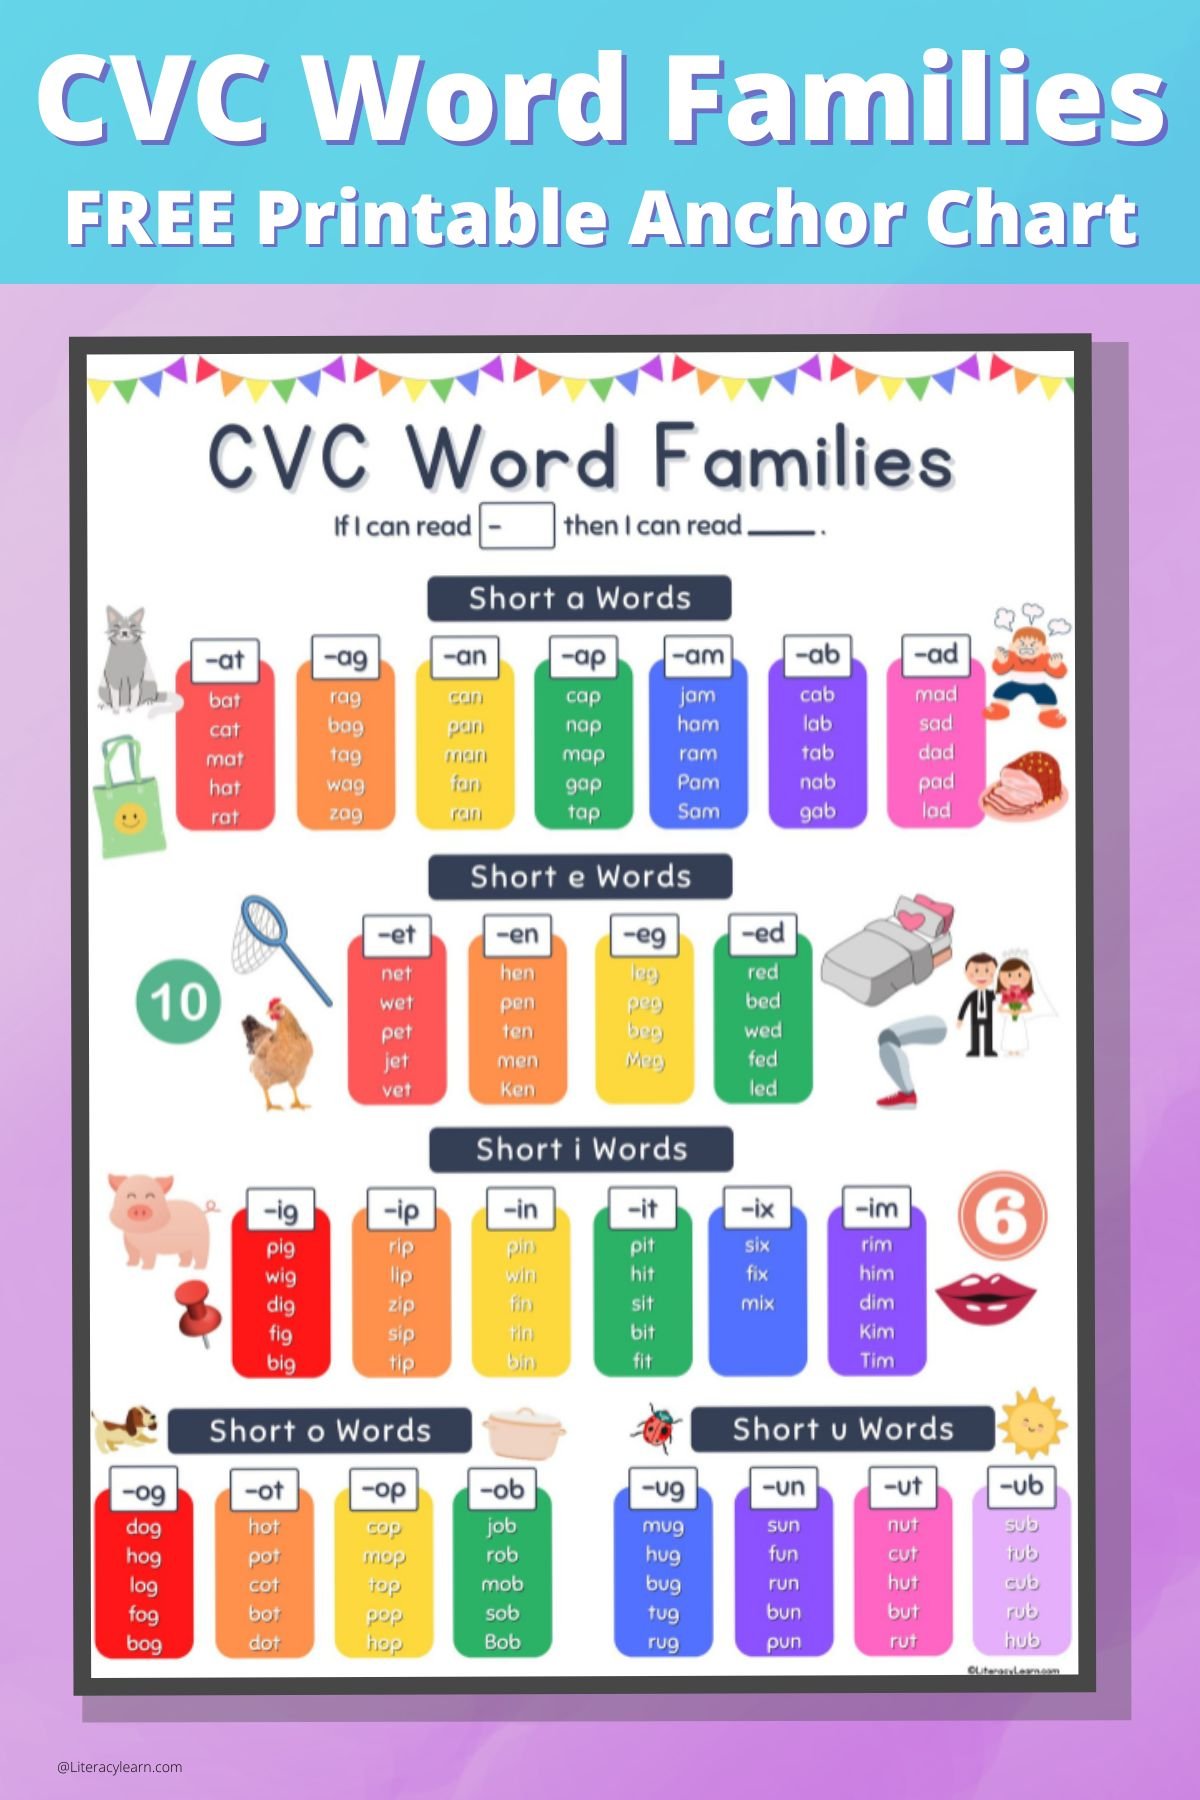 105+ Cvc Word Families - List & Free Anchor Chart - Literacy Learn